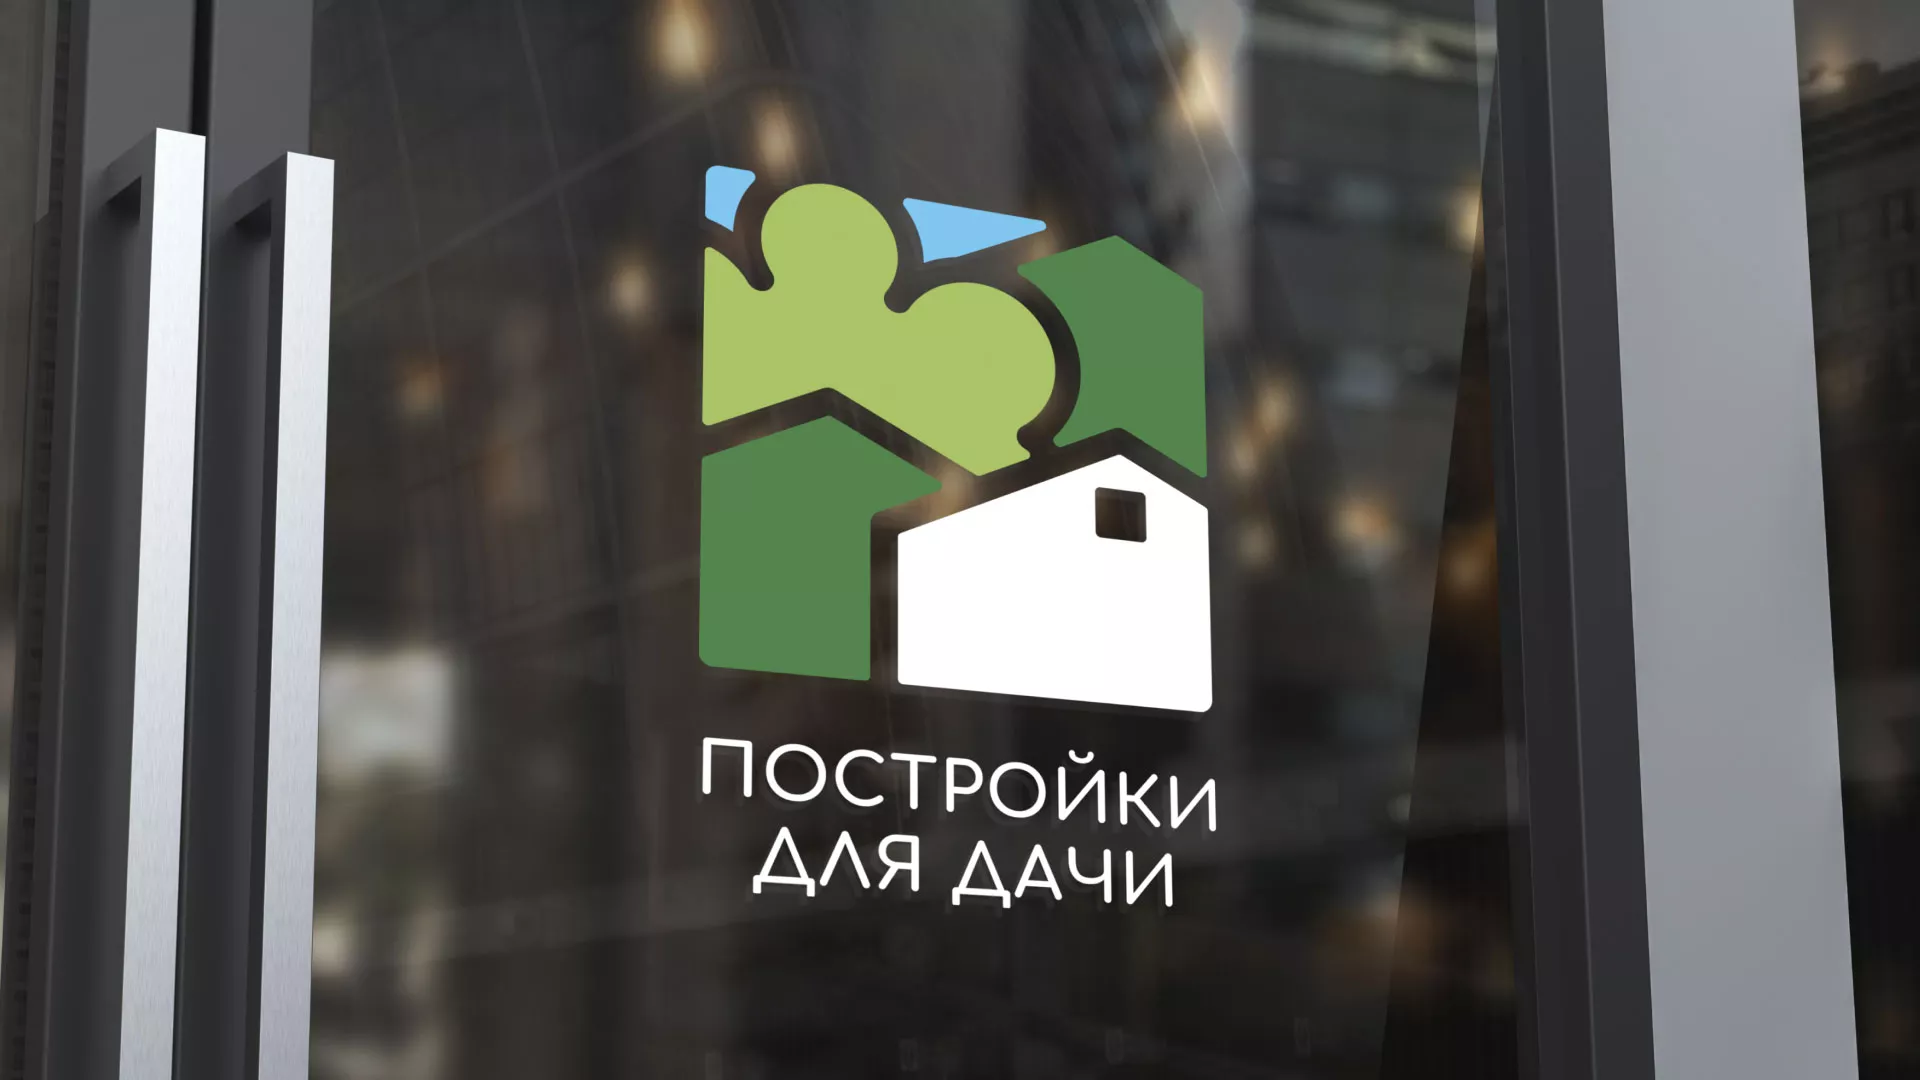 Разработка логотипа в Красавино для компании «Постройки для дачи»